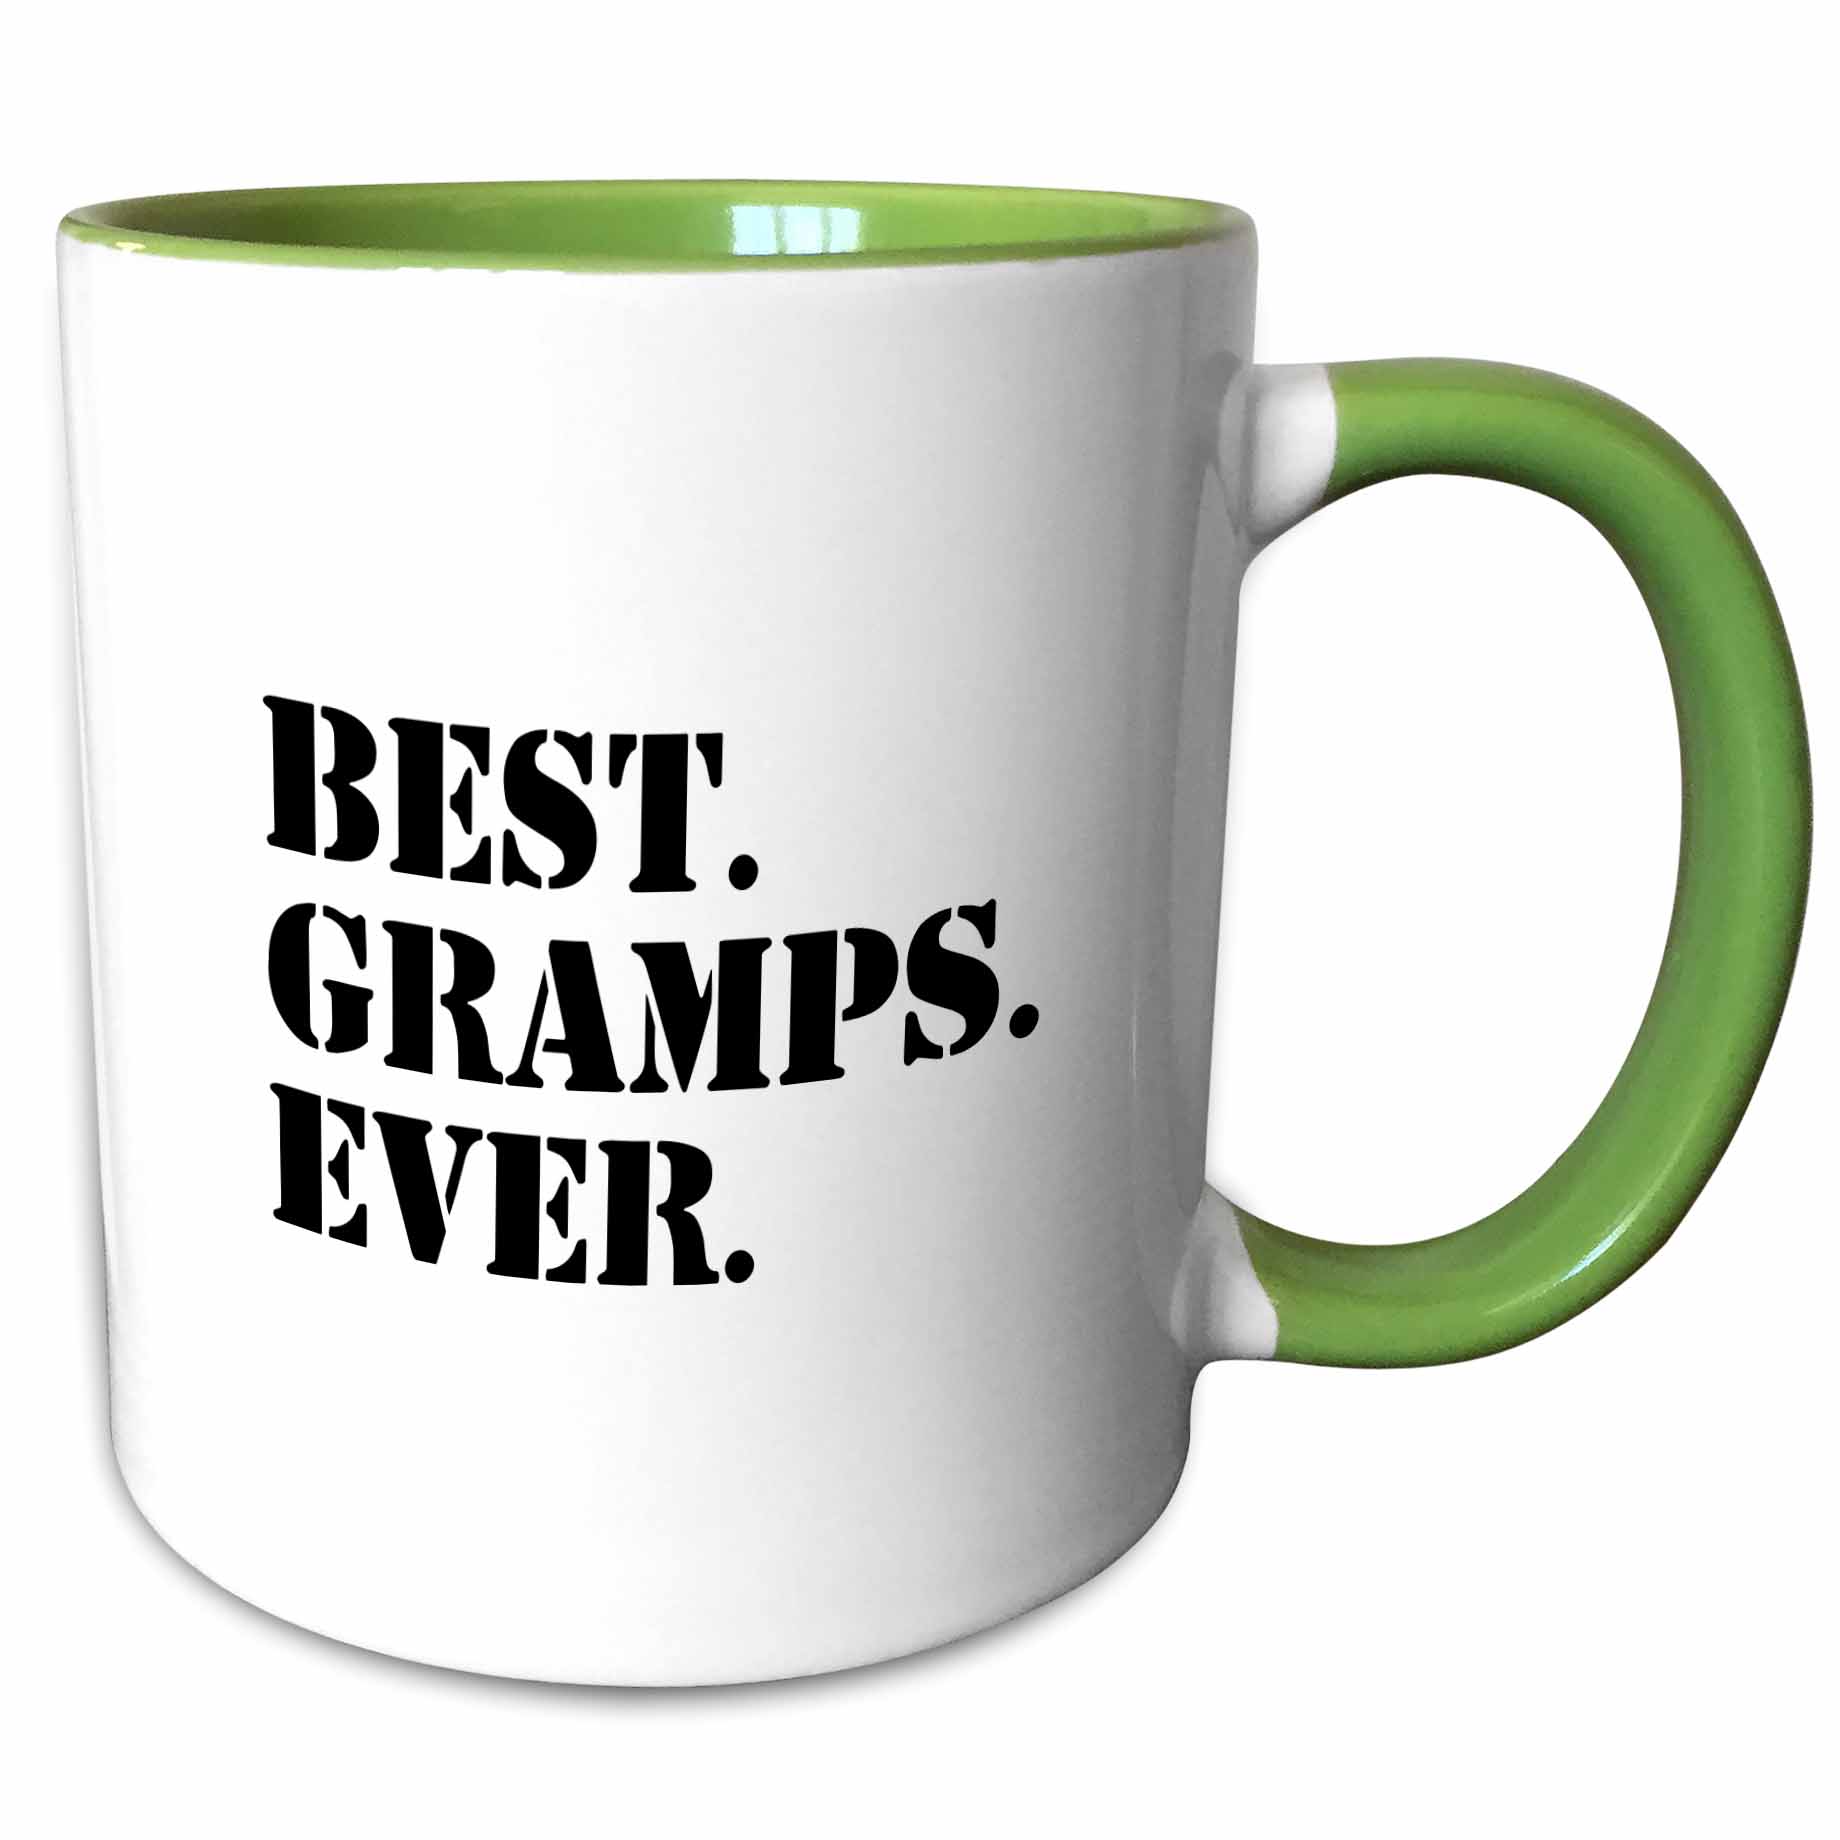 Best Gramps Ever - Gifts for Grandfathers - Granddad Grandpa nicknames - black text - family gifts 15oz Two-Tone Green Mug mug-151514-12 - image 1 of 3